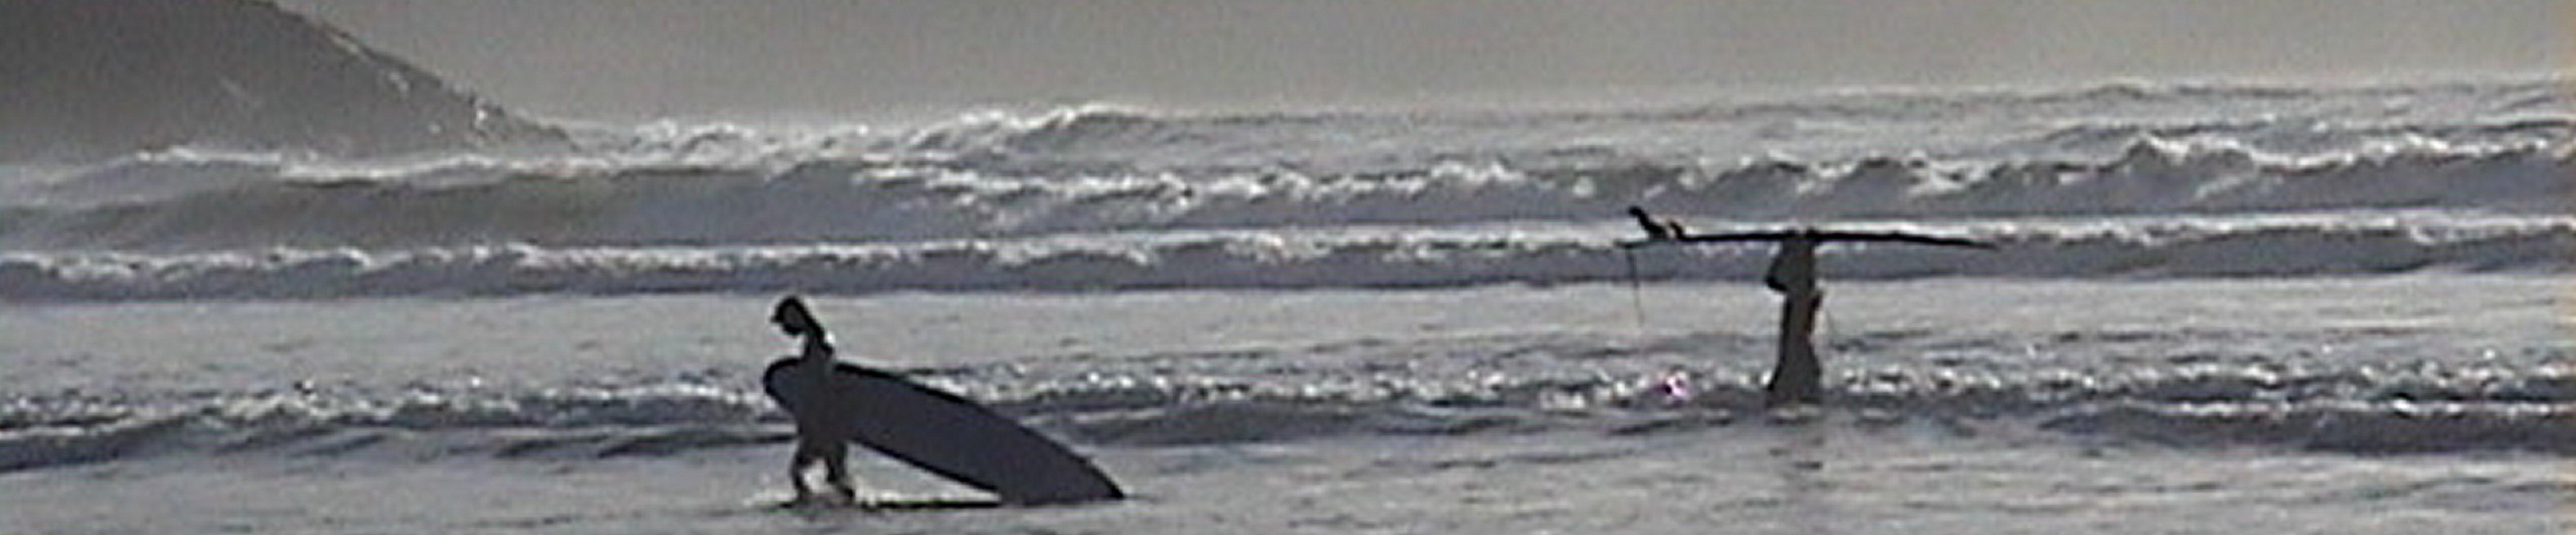 SURFtown banner